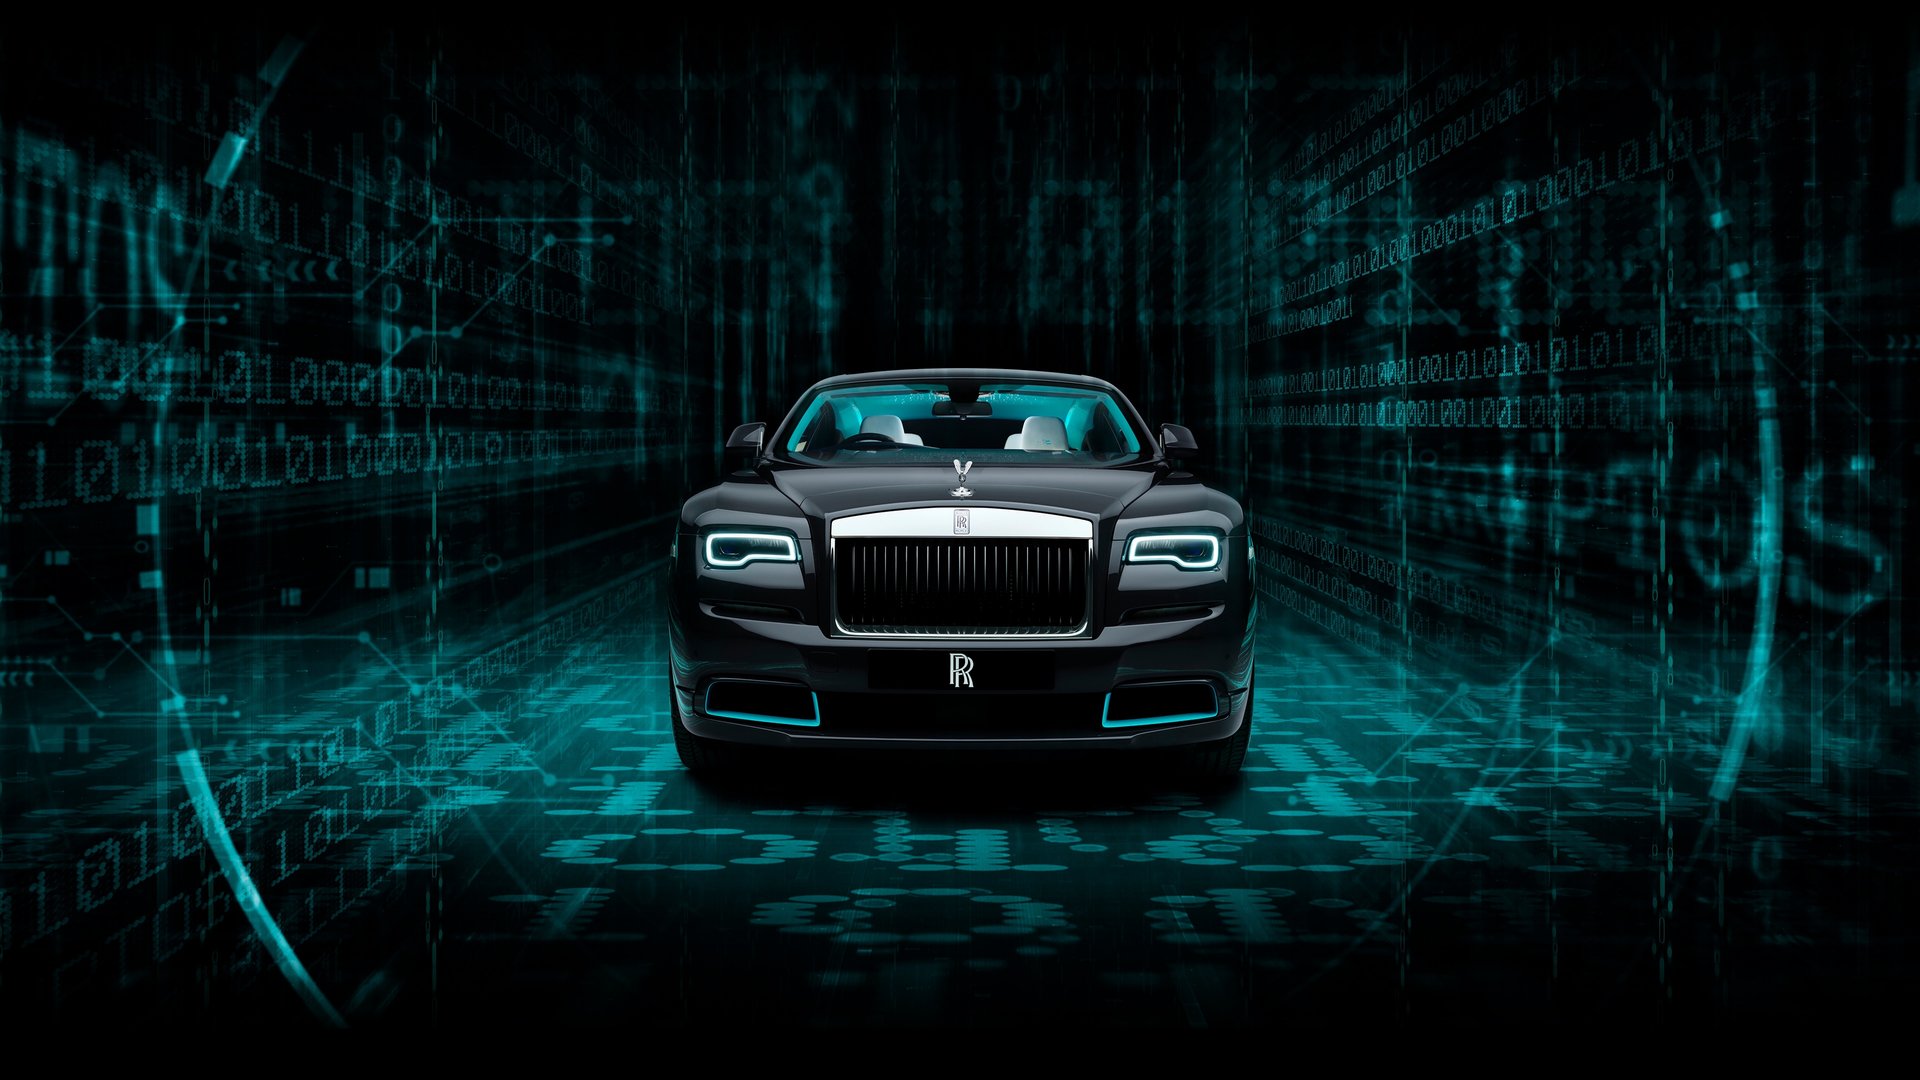 Rolls-Royce Wraith Kryptos รุ่น Limited Edition พร้อมซ่อนรหัสลับที่รอคุณมาค้นหา